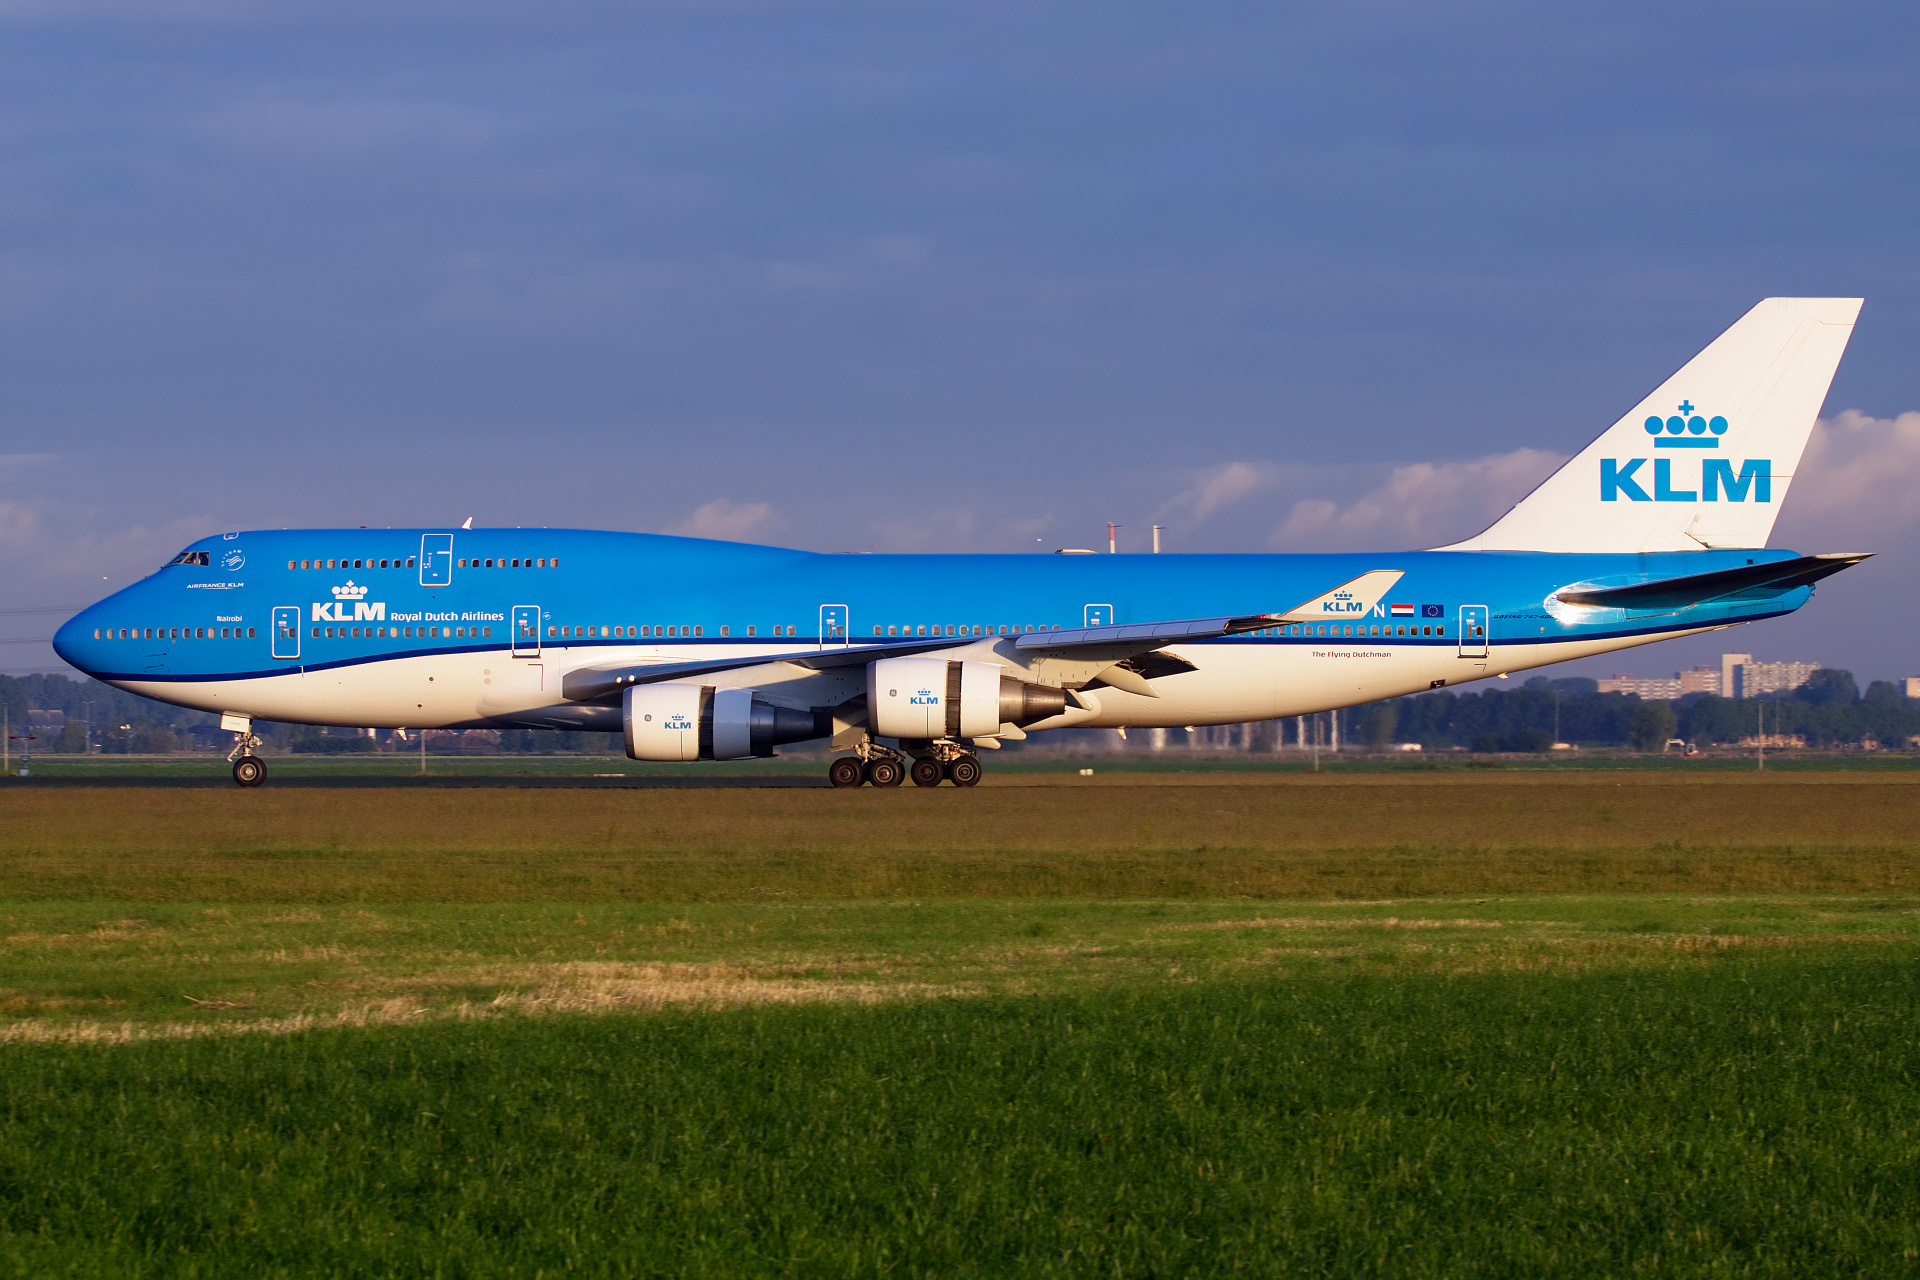 PH-BFN, KLM Royal Dutch Airlines (Aircraft » Schiphol Spotting » Boeing 747-400)